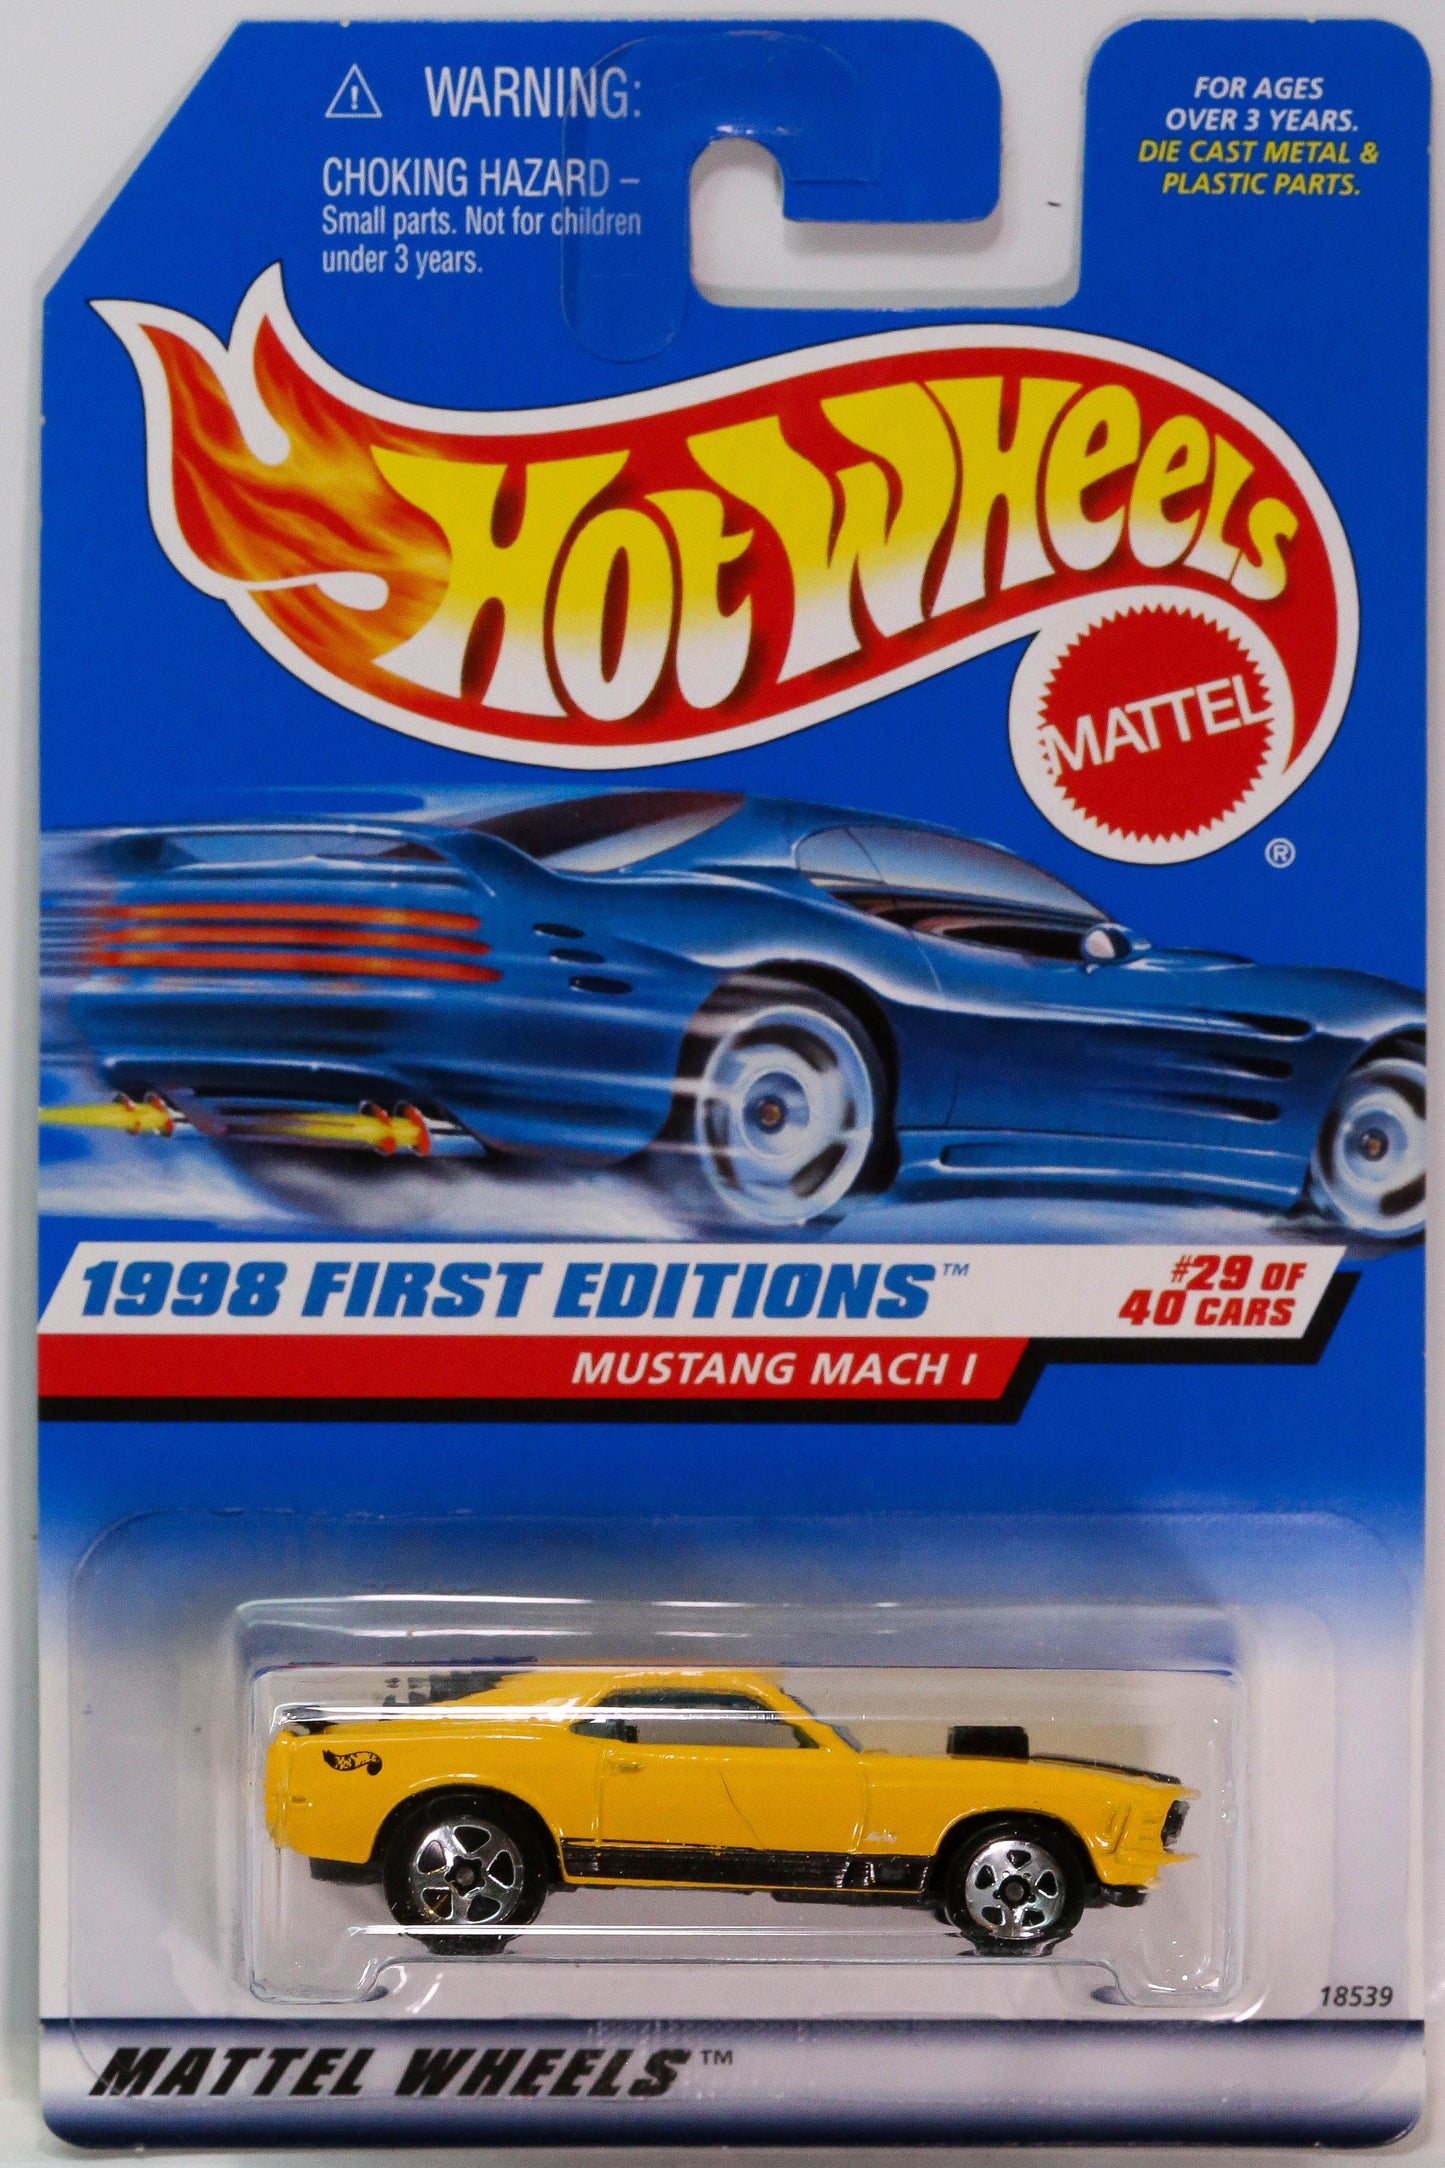 Vintage Hot Wheels Mustang Mach I - 1998 First Editions 18539 - Plus (+) a Bonus Hot Wheel